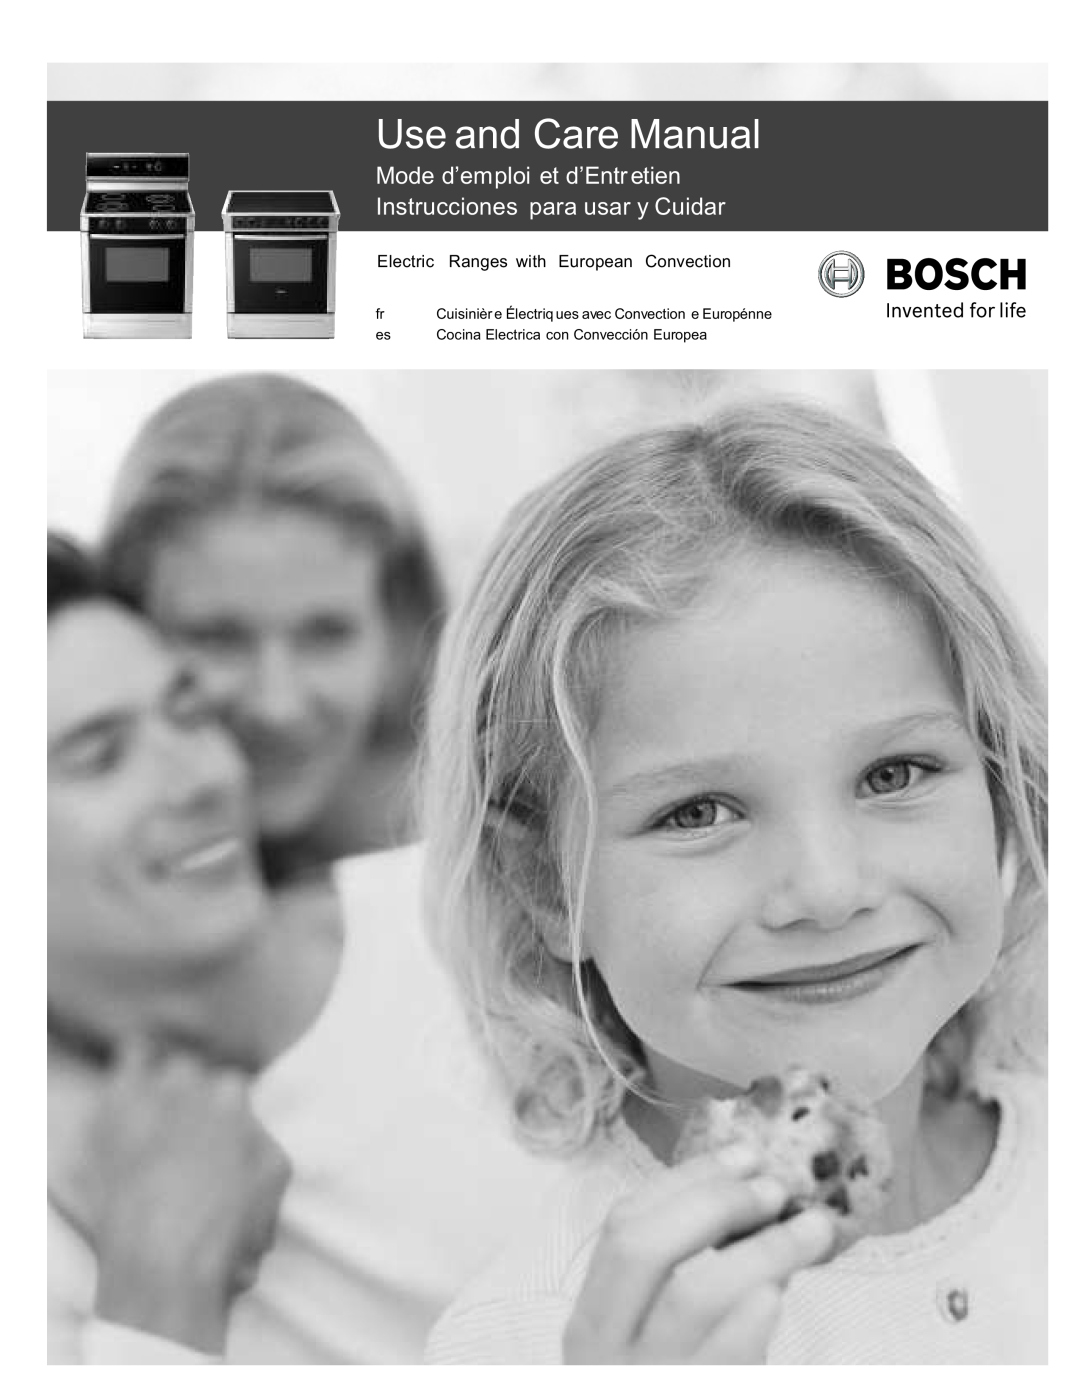 Bosch Appliances HES7282U manual Use and Care Manual, Mode d’emploi et d’Entretien Instrucciones para usar y Cuidar 